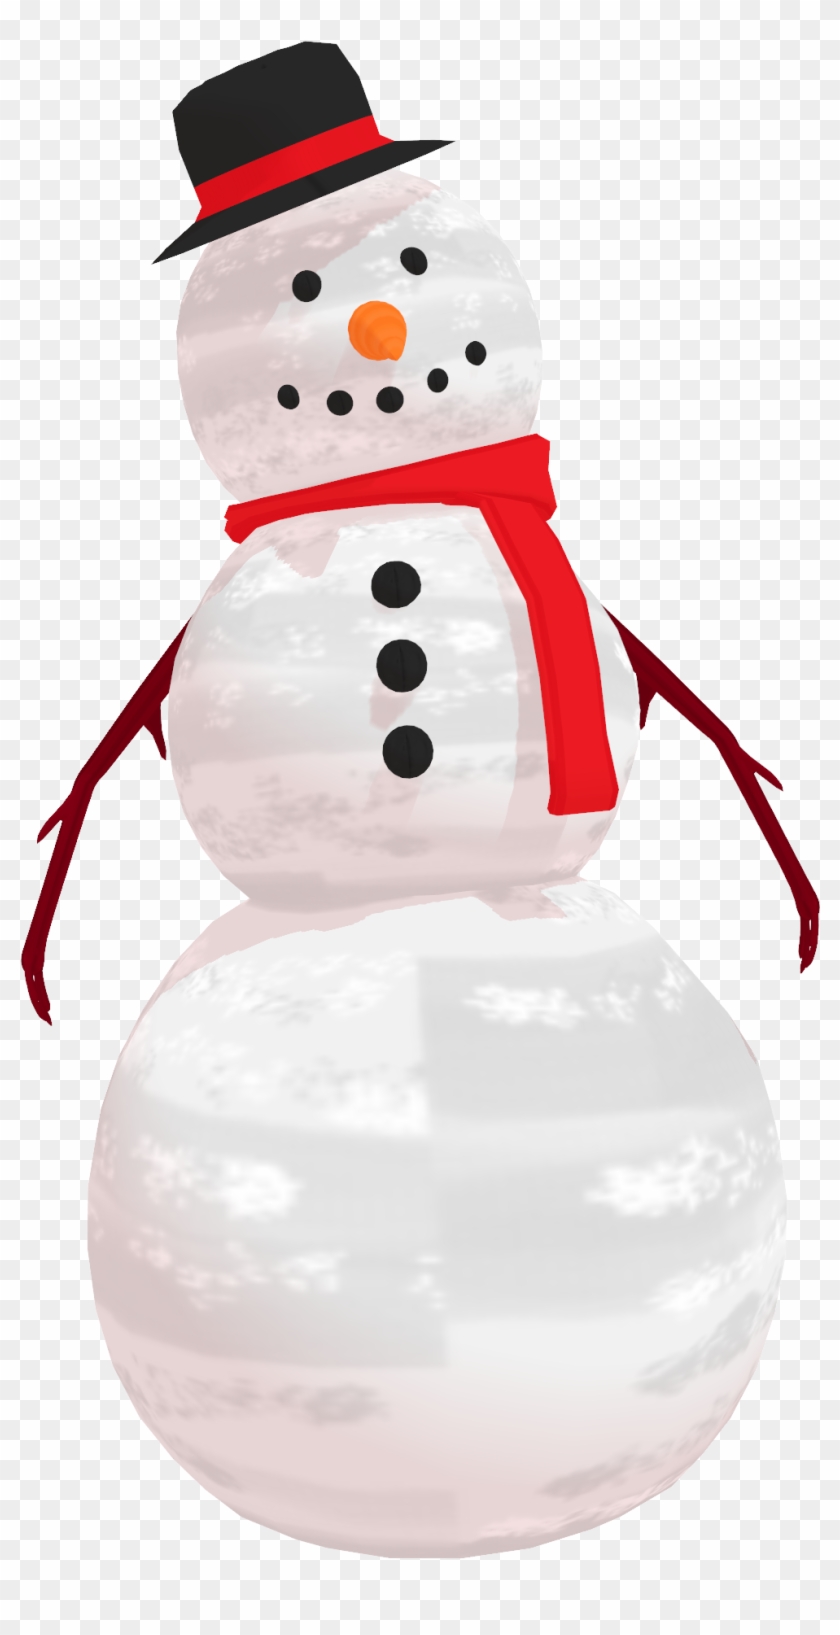 Mmd Mbarnesmmd's Snowman By Mbarnesmmd Mmd Mbarnesmmd's - Snowman #339520